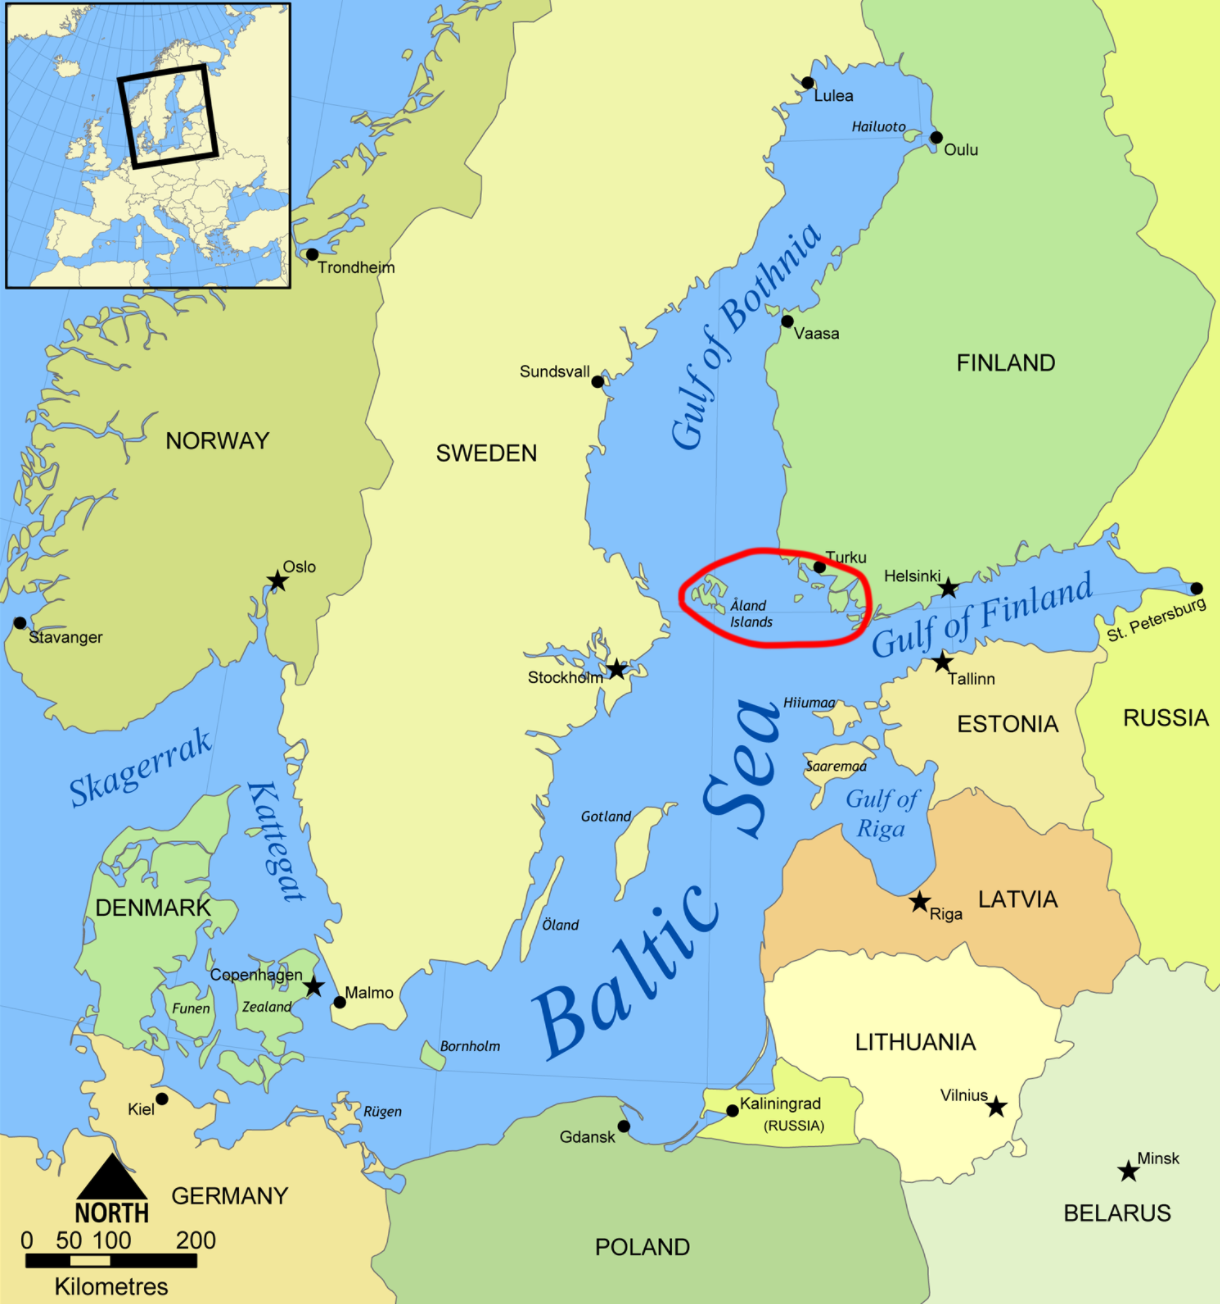 Turku Map: Where Is Finland City Located? | Heavy.com